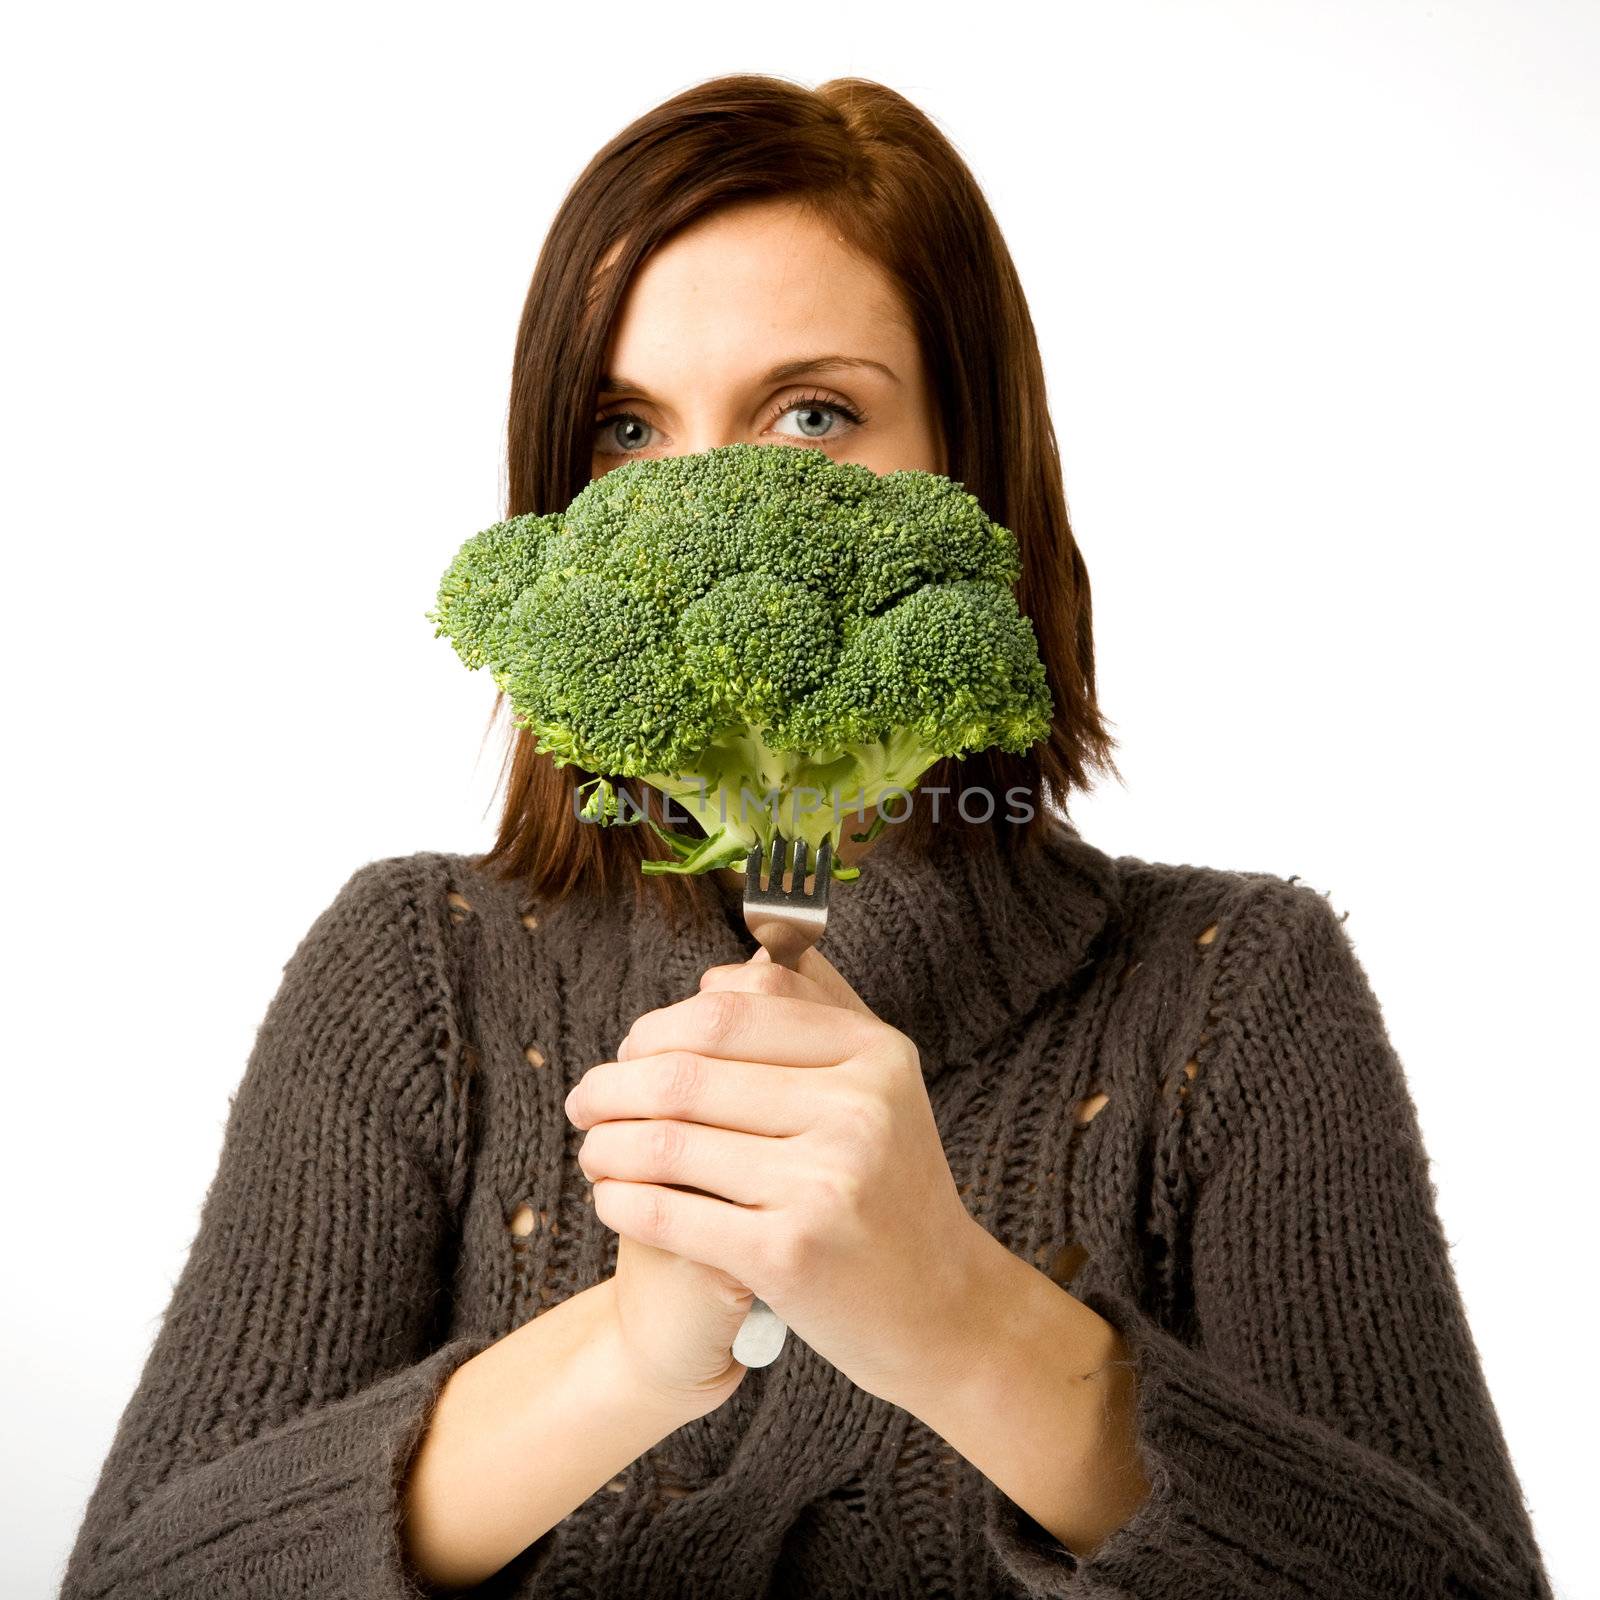 A woman ready to eat broccoli